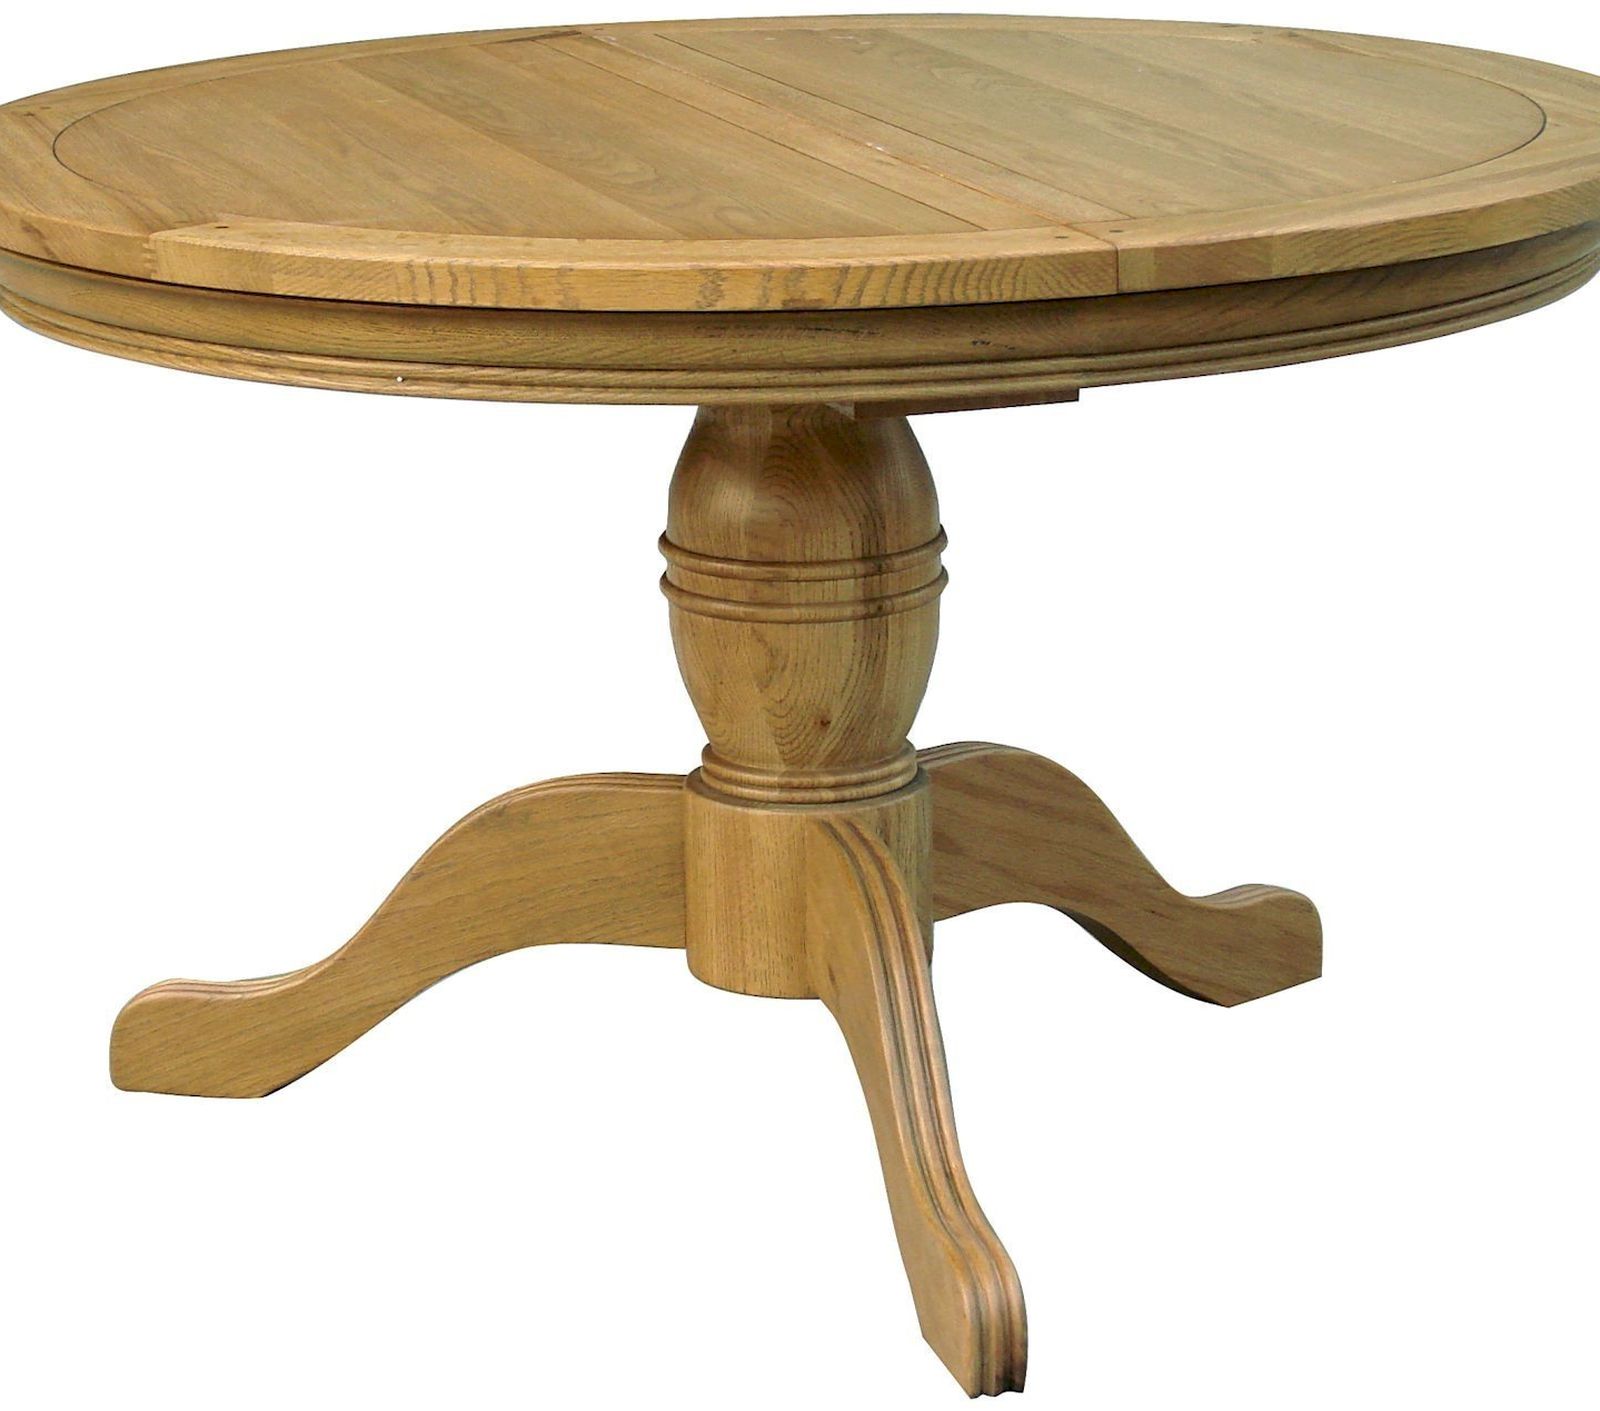 Round Pedestal Kitchen Table photo - 1